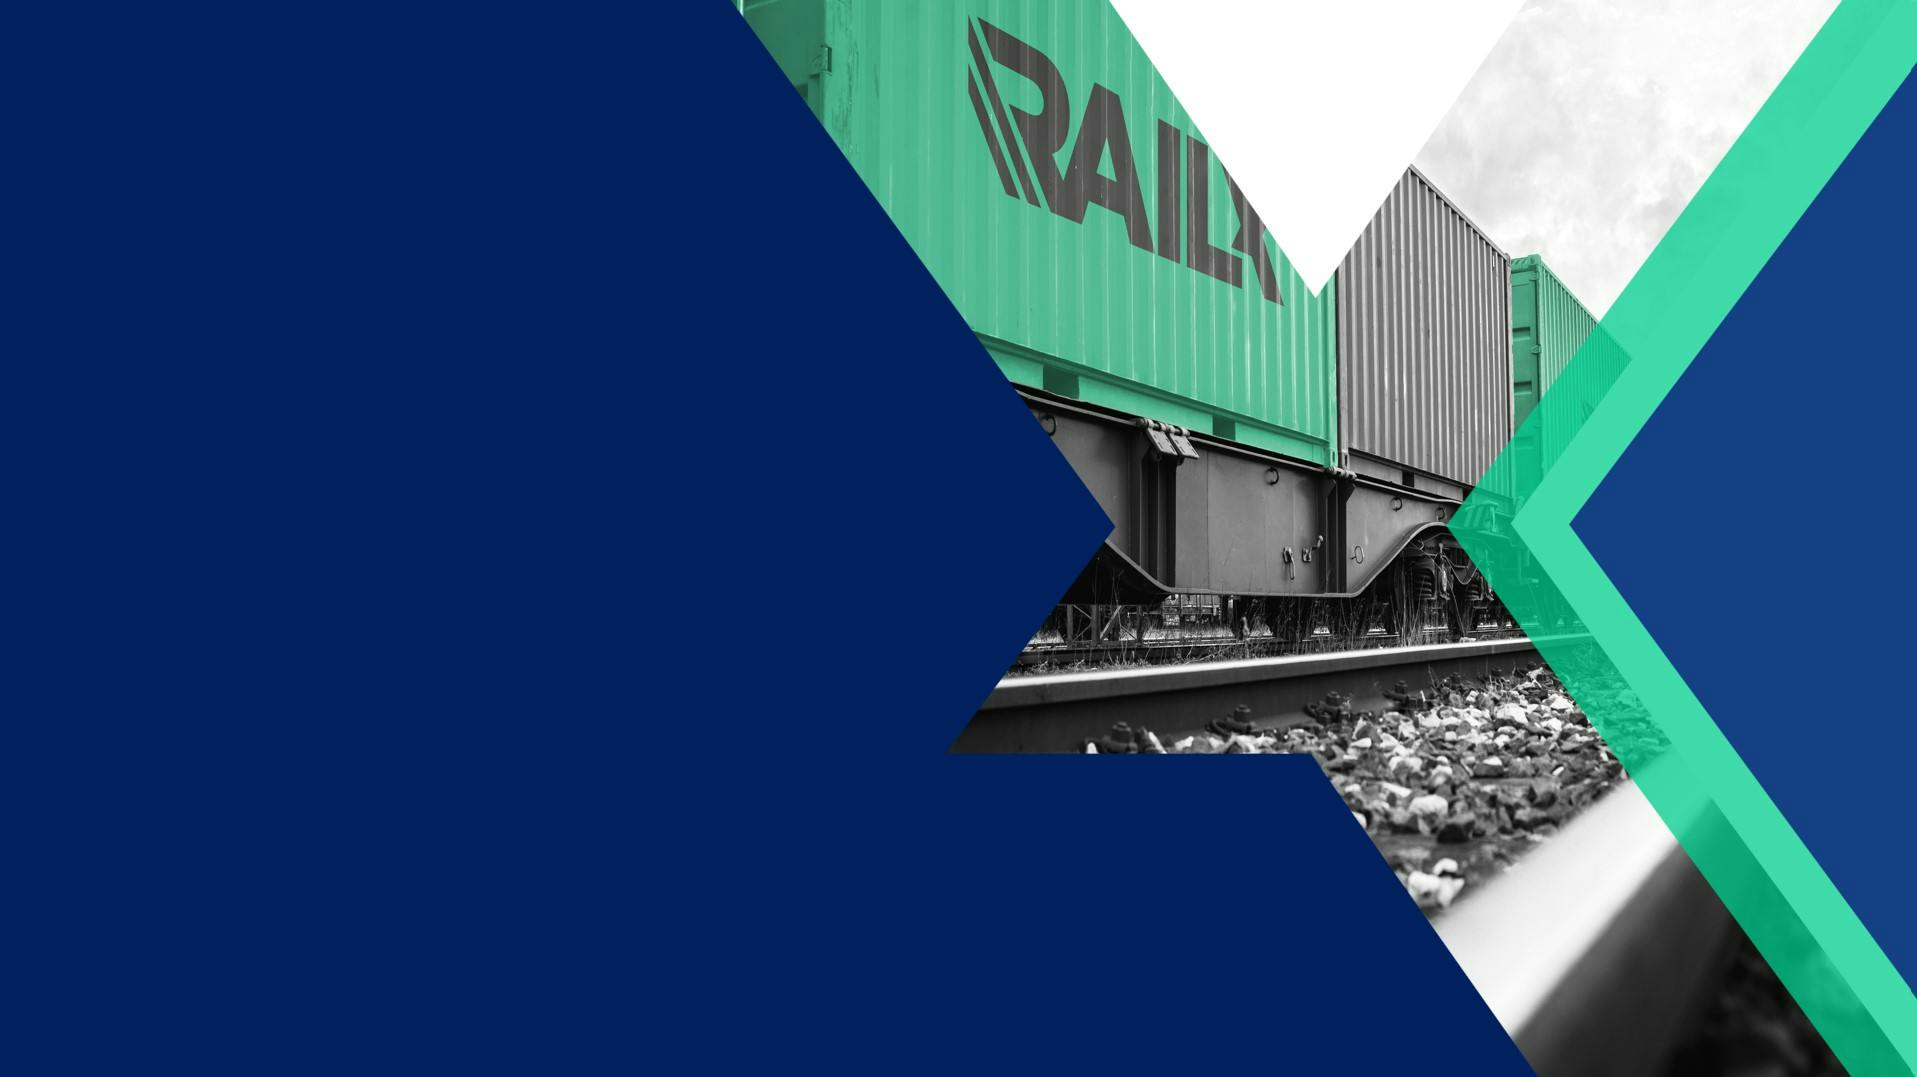 RailX cargo in a graphic design